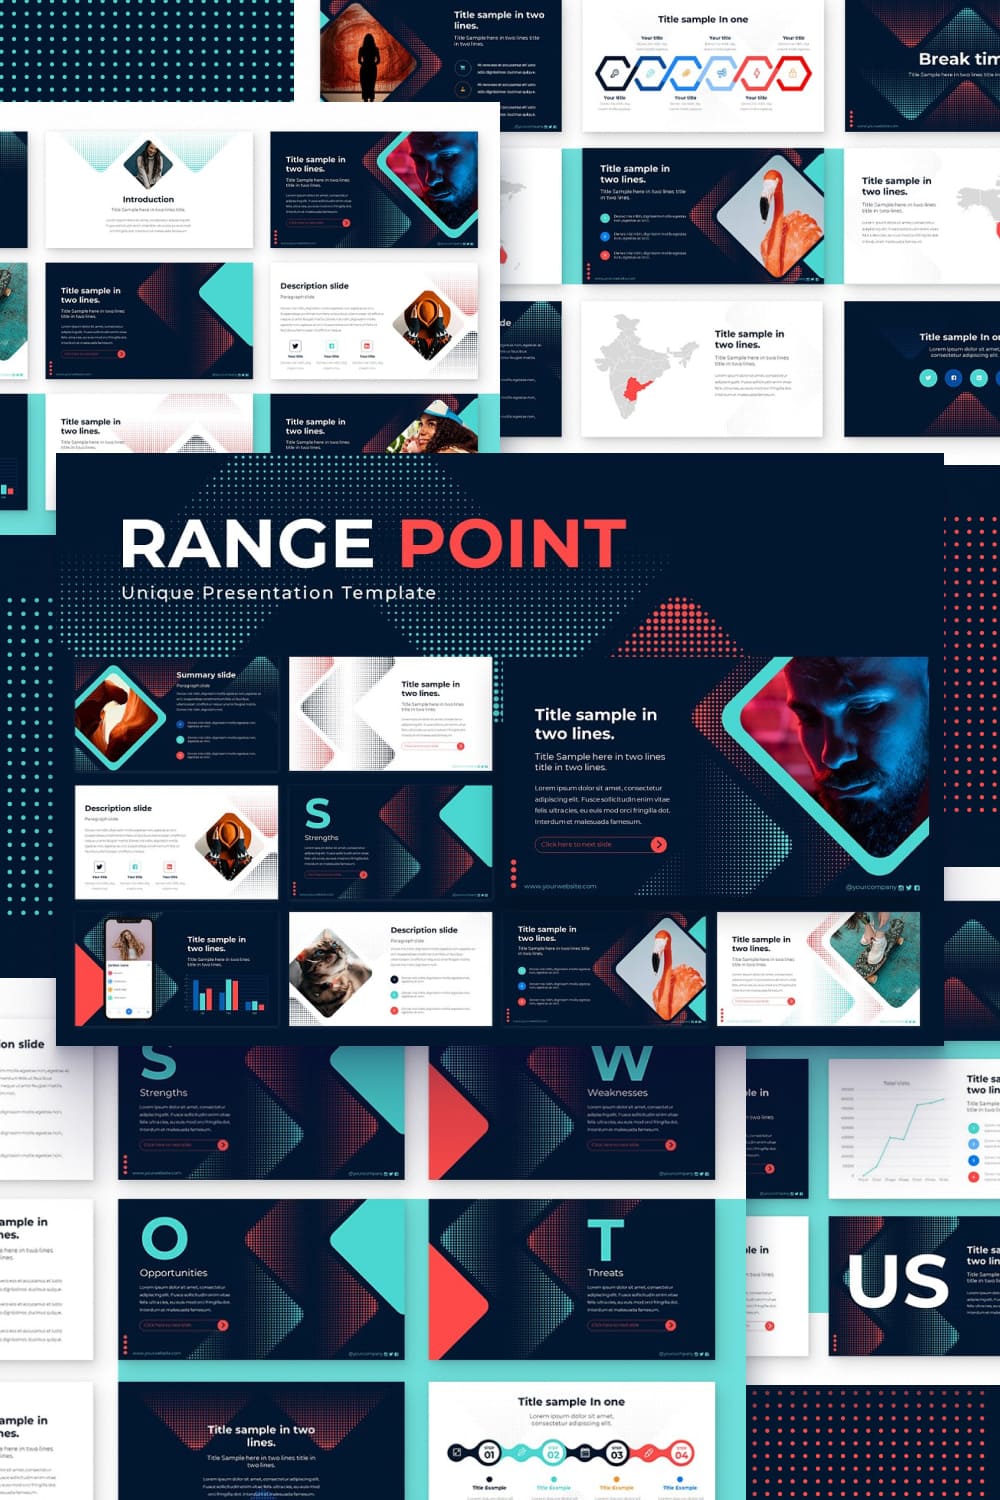 Range Point Powerpoint Presentation Template by MasterBundles Pinterest Collage Image.